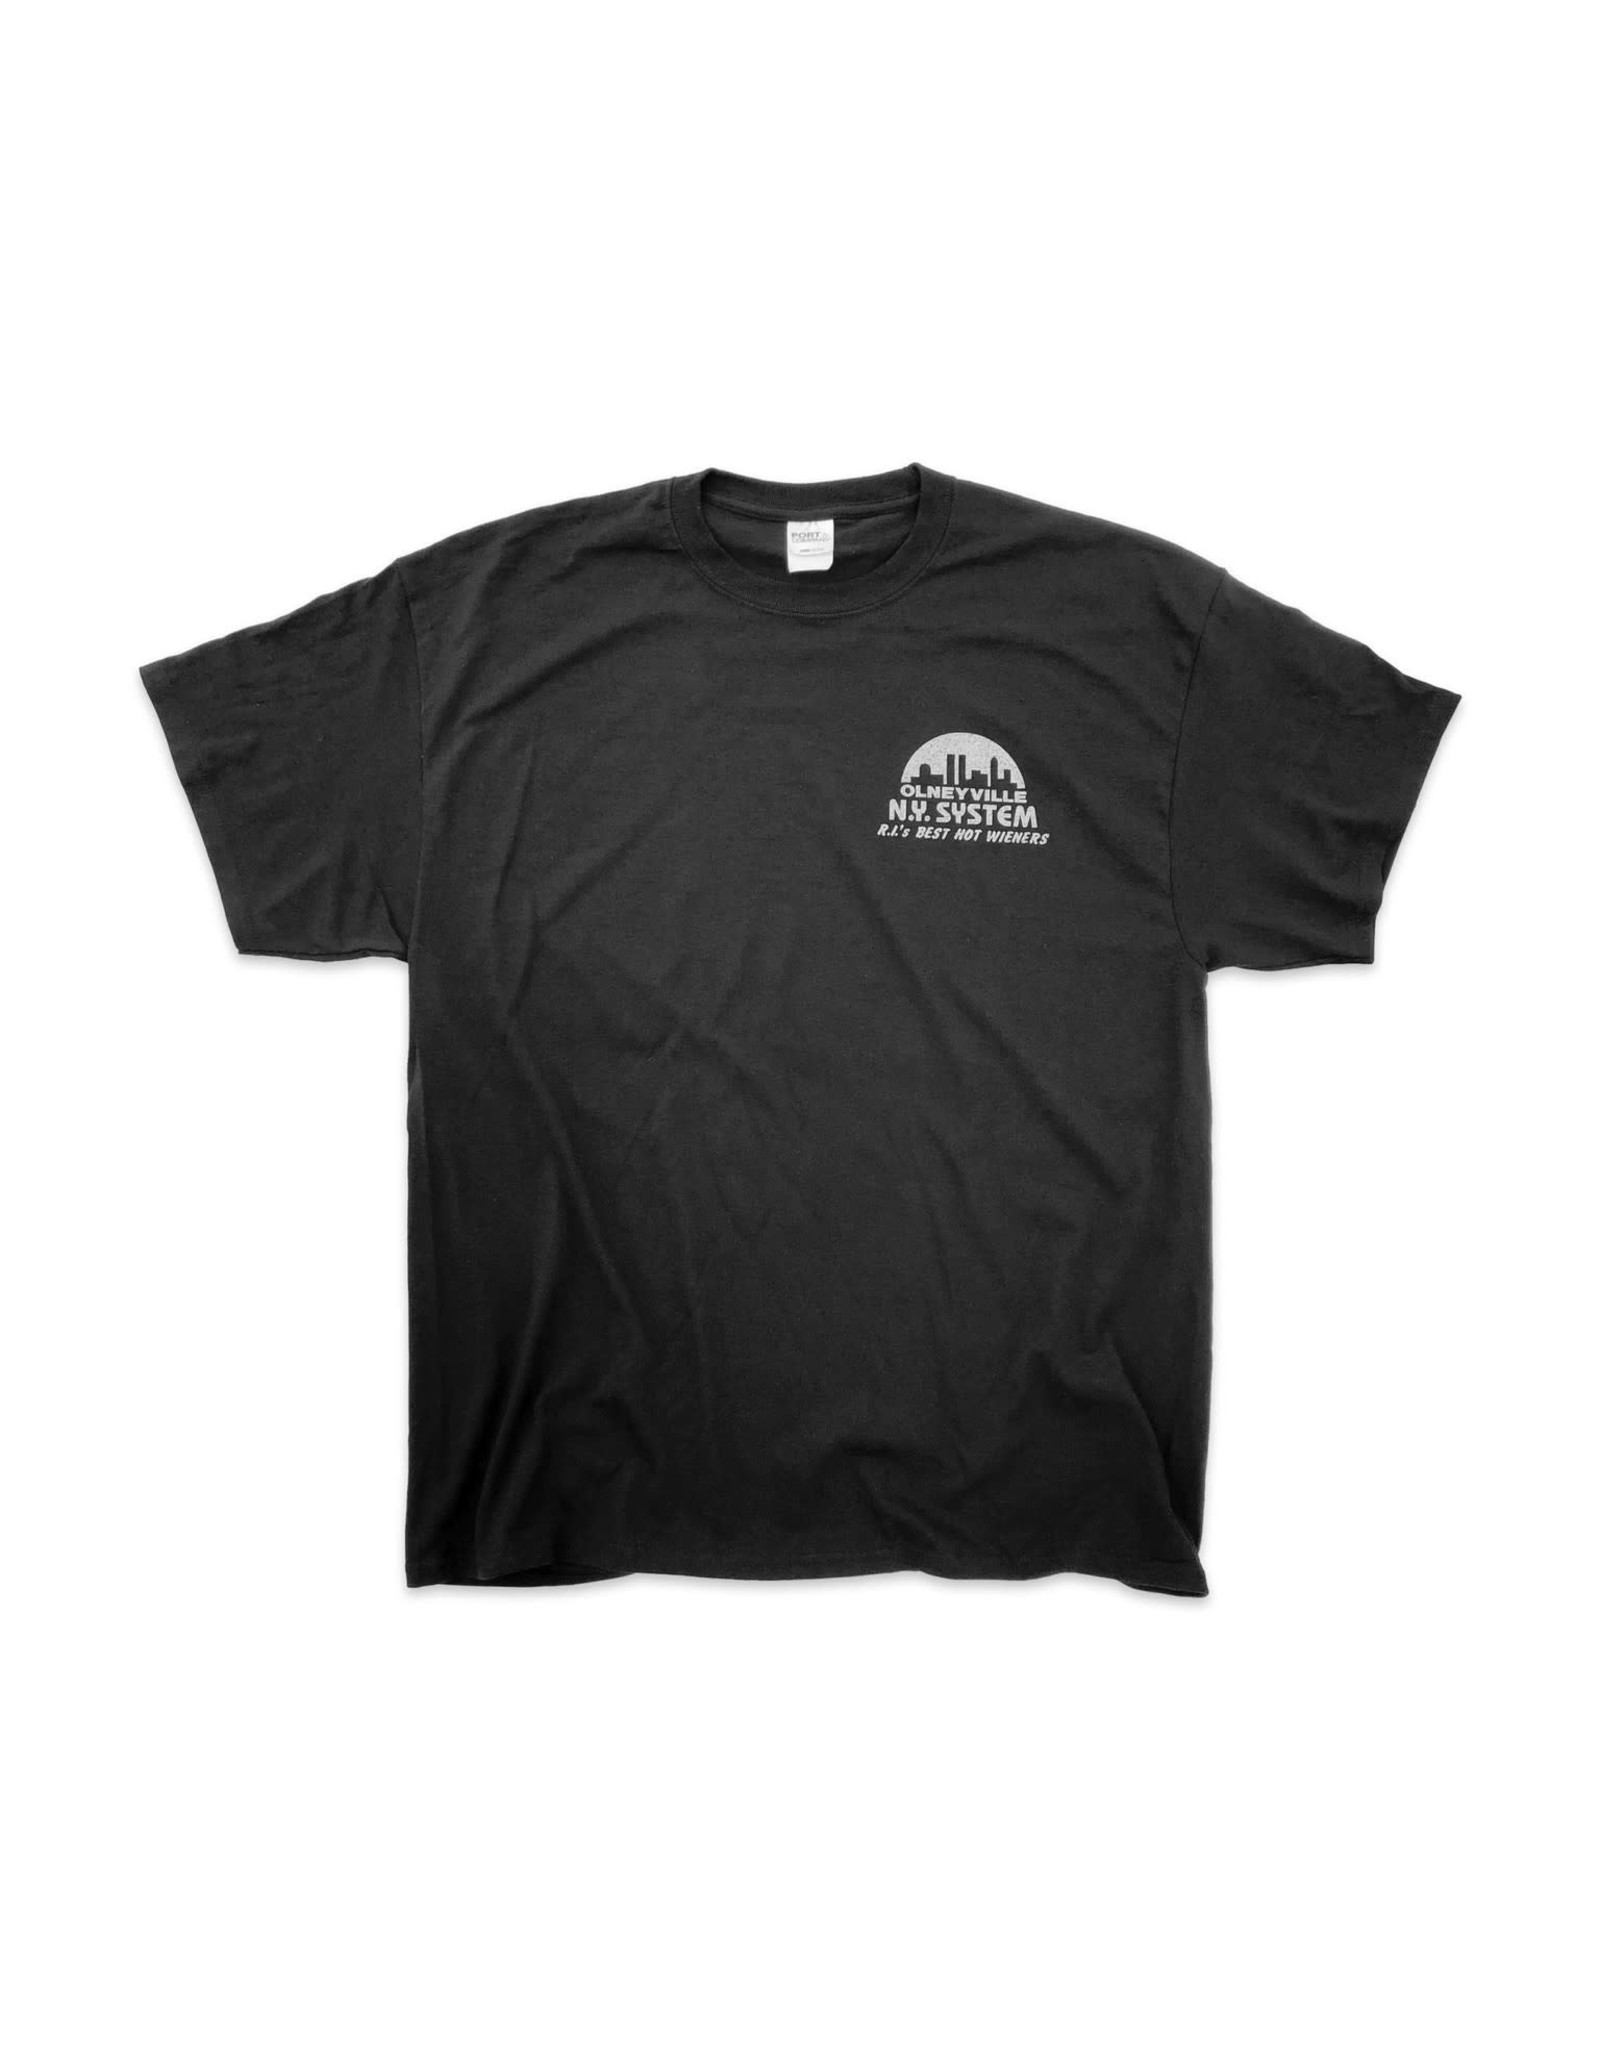 Olneyville NY System T-shirt - Home